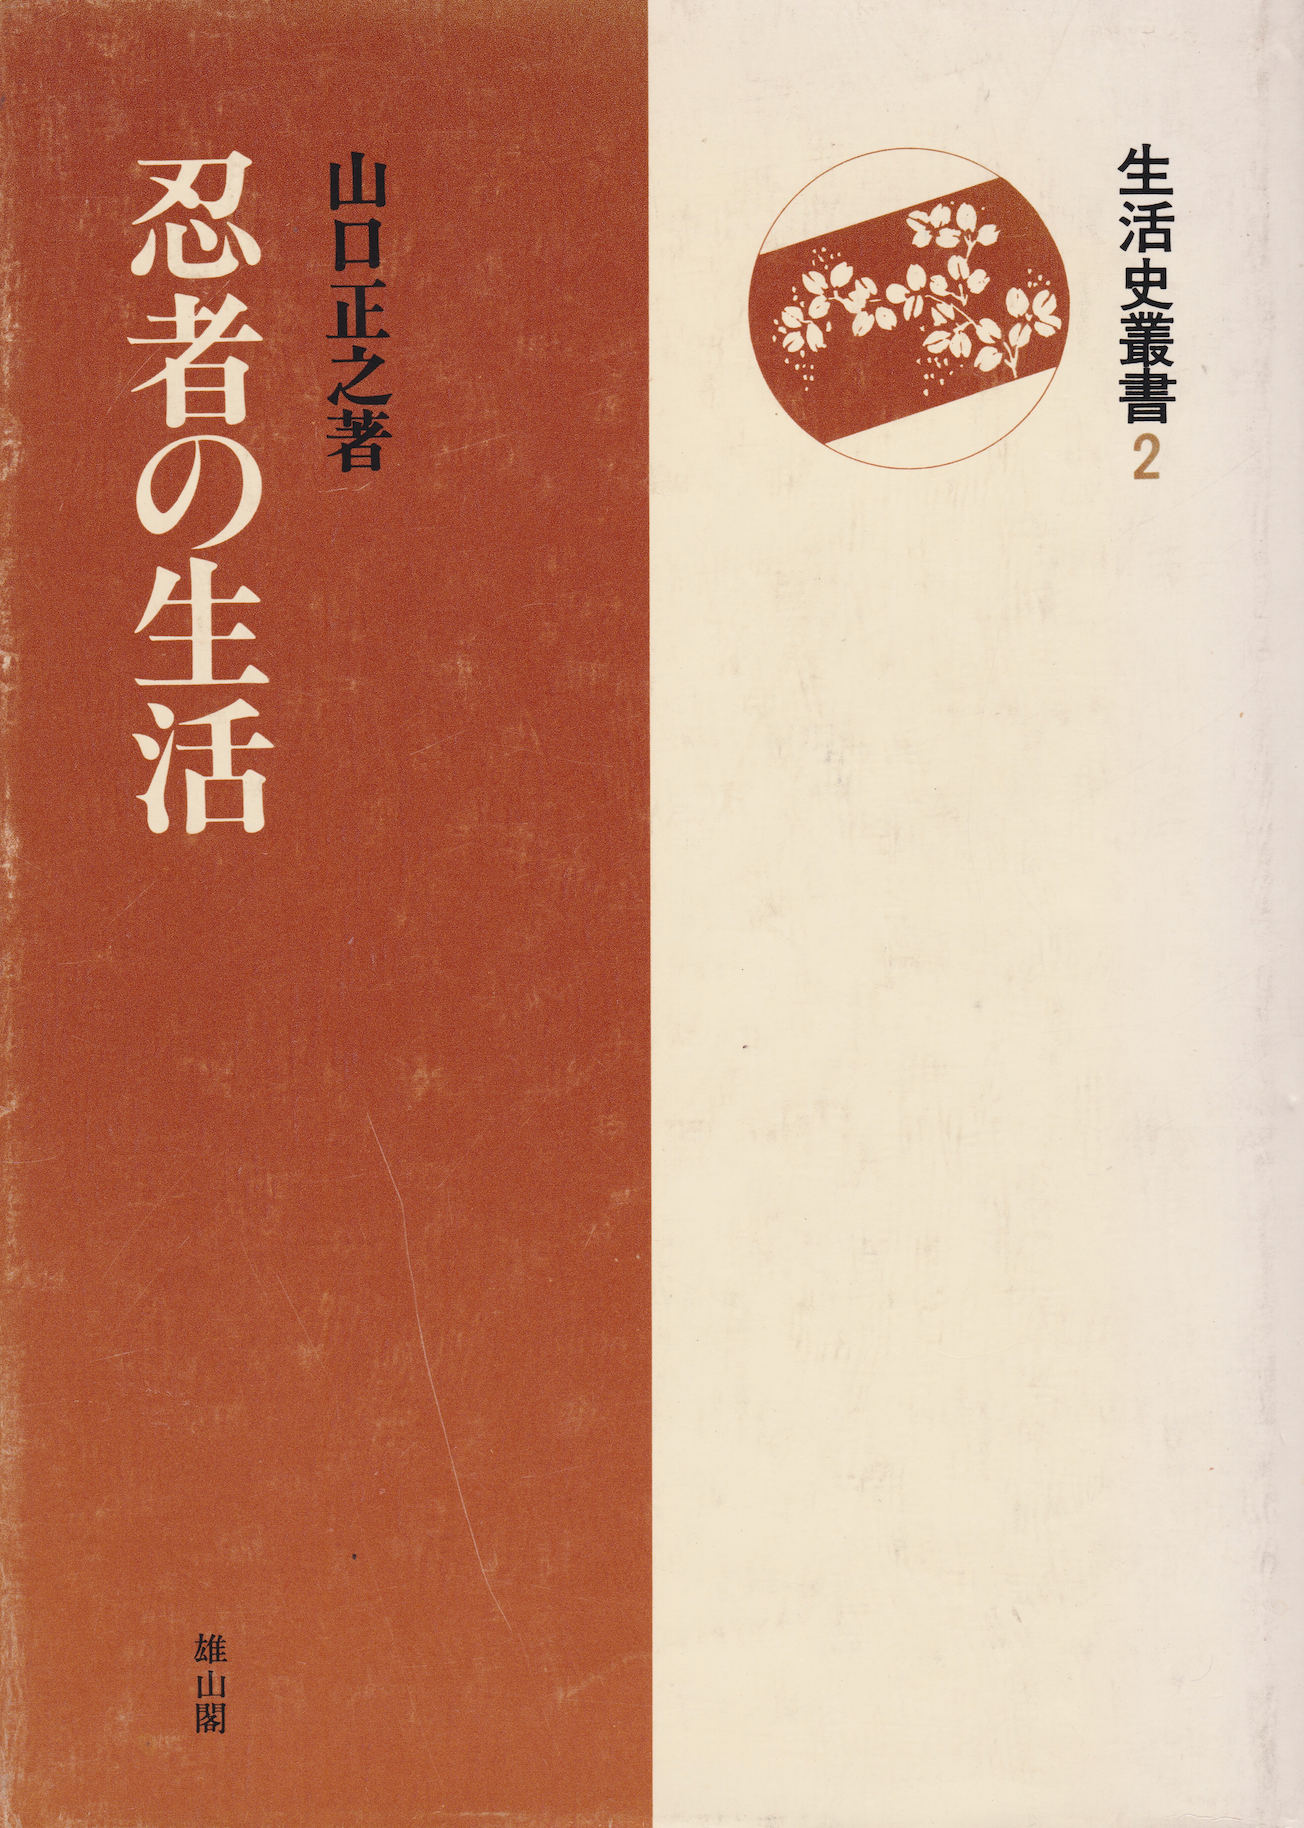 Ninja Seikatsu (Lifestyle) Book by Masayuki Yamaguchi (Hardcover)(Preowned)